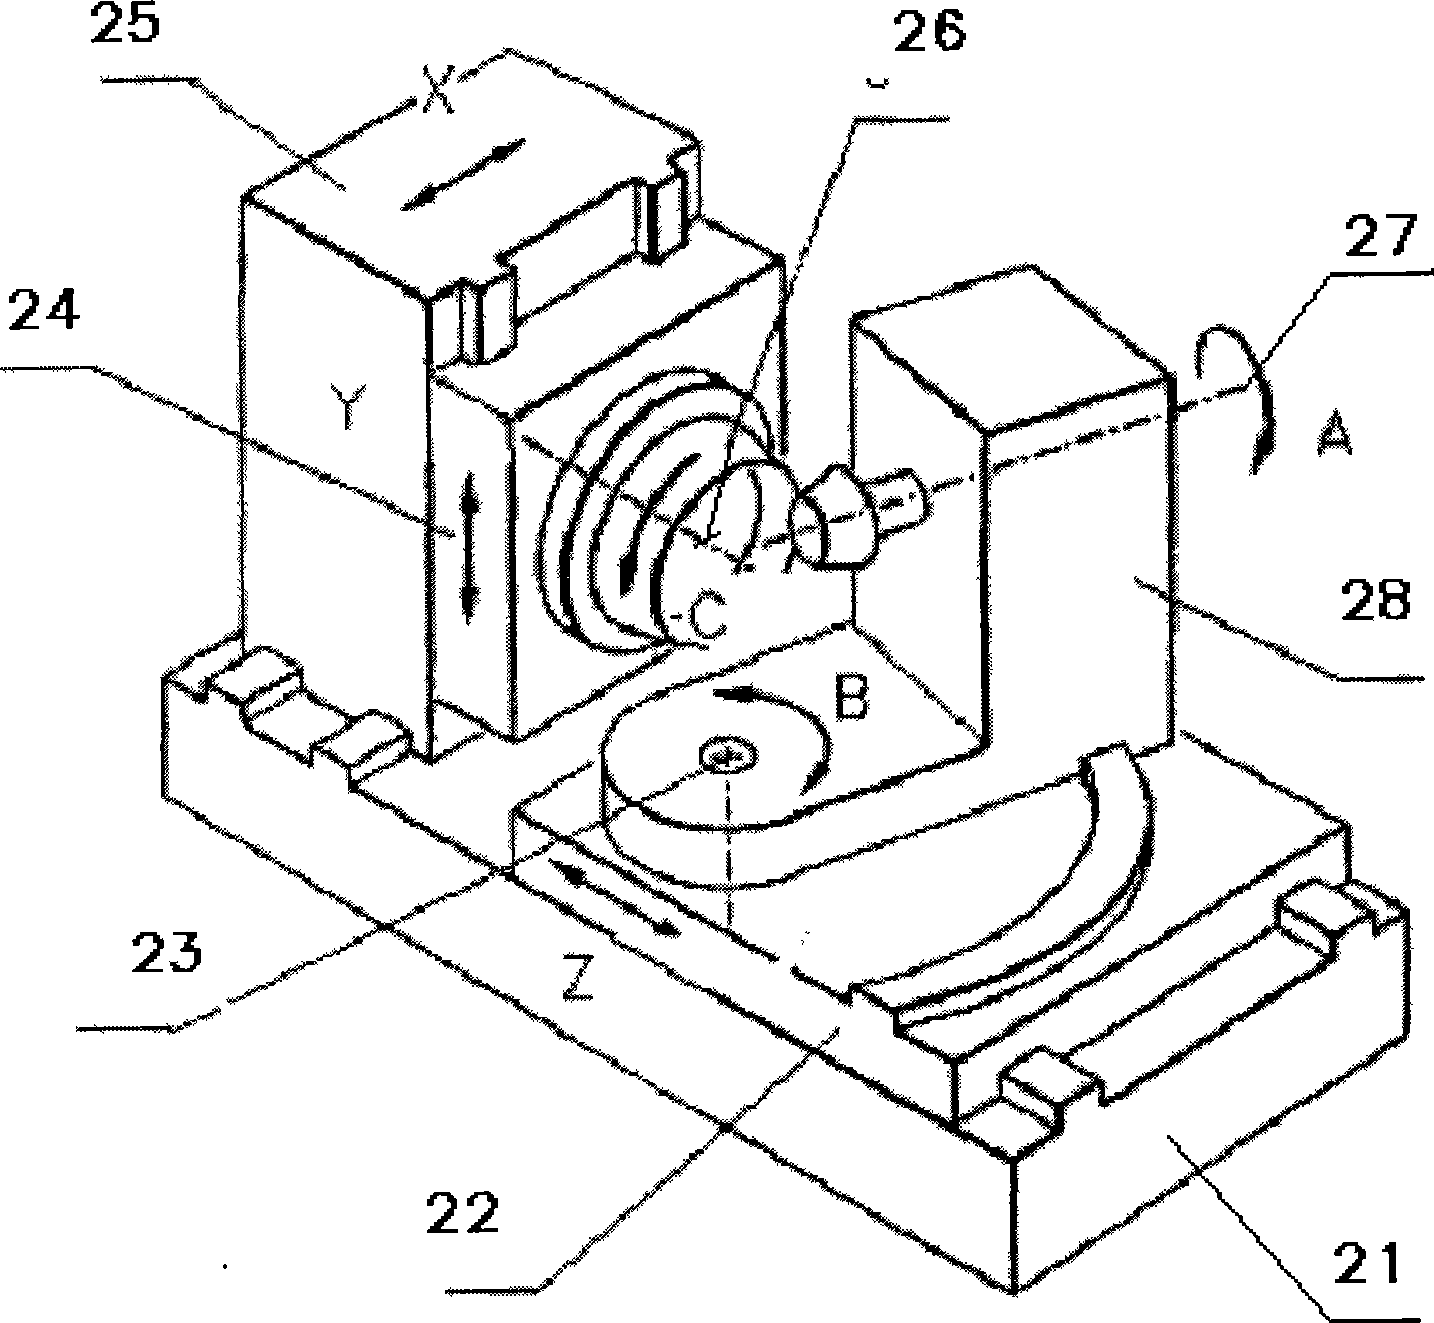 Six-axis five-linkage spiral taper gear cutting machine tool